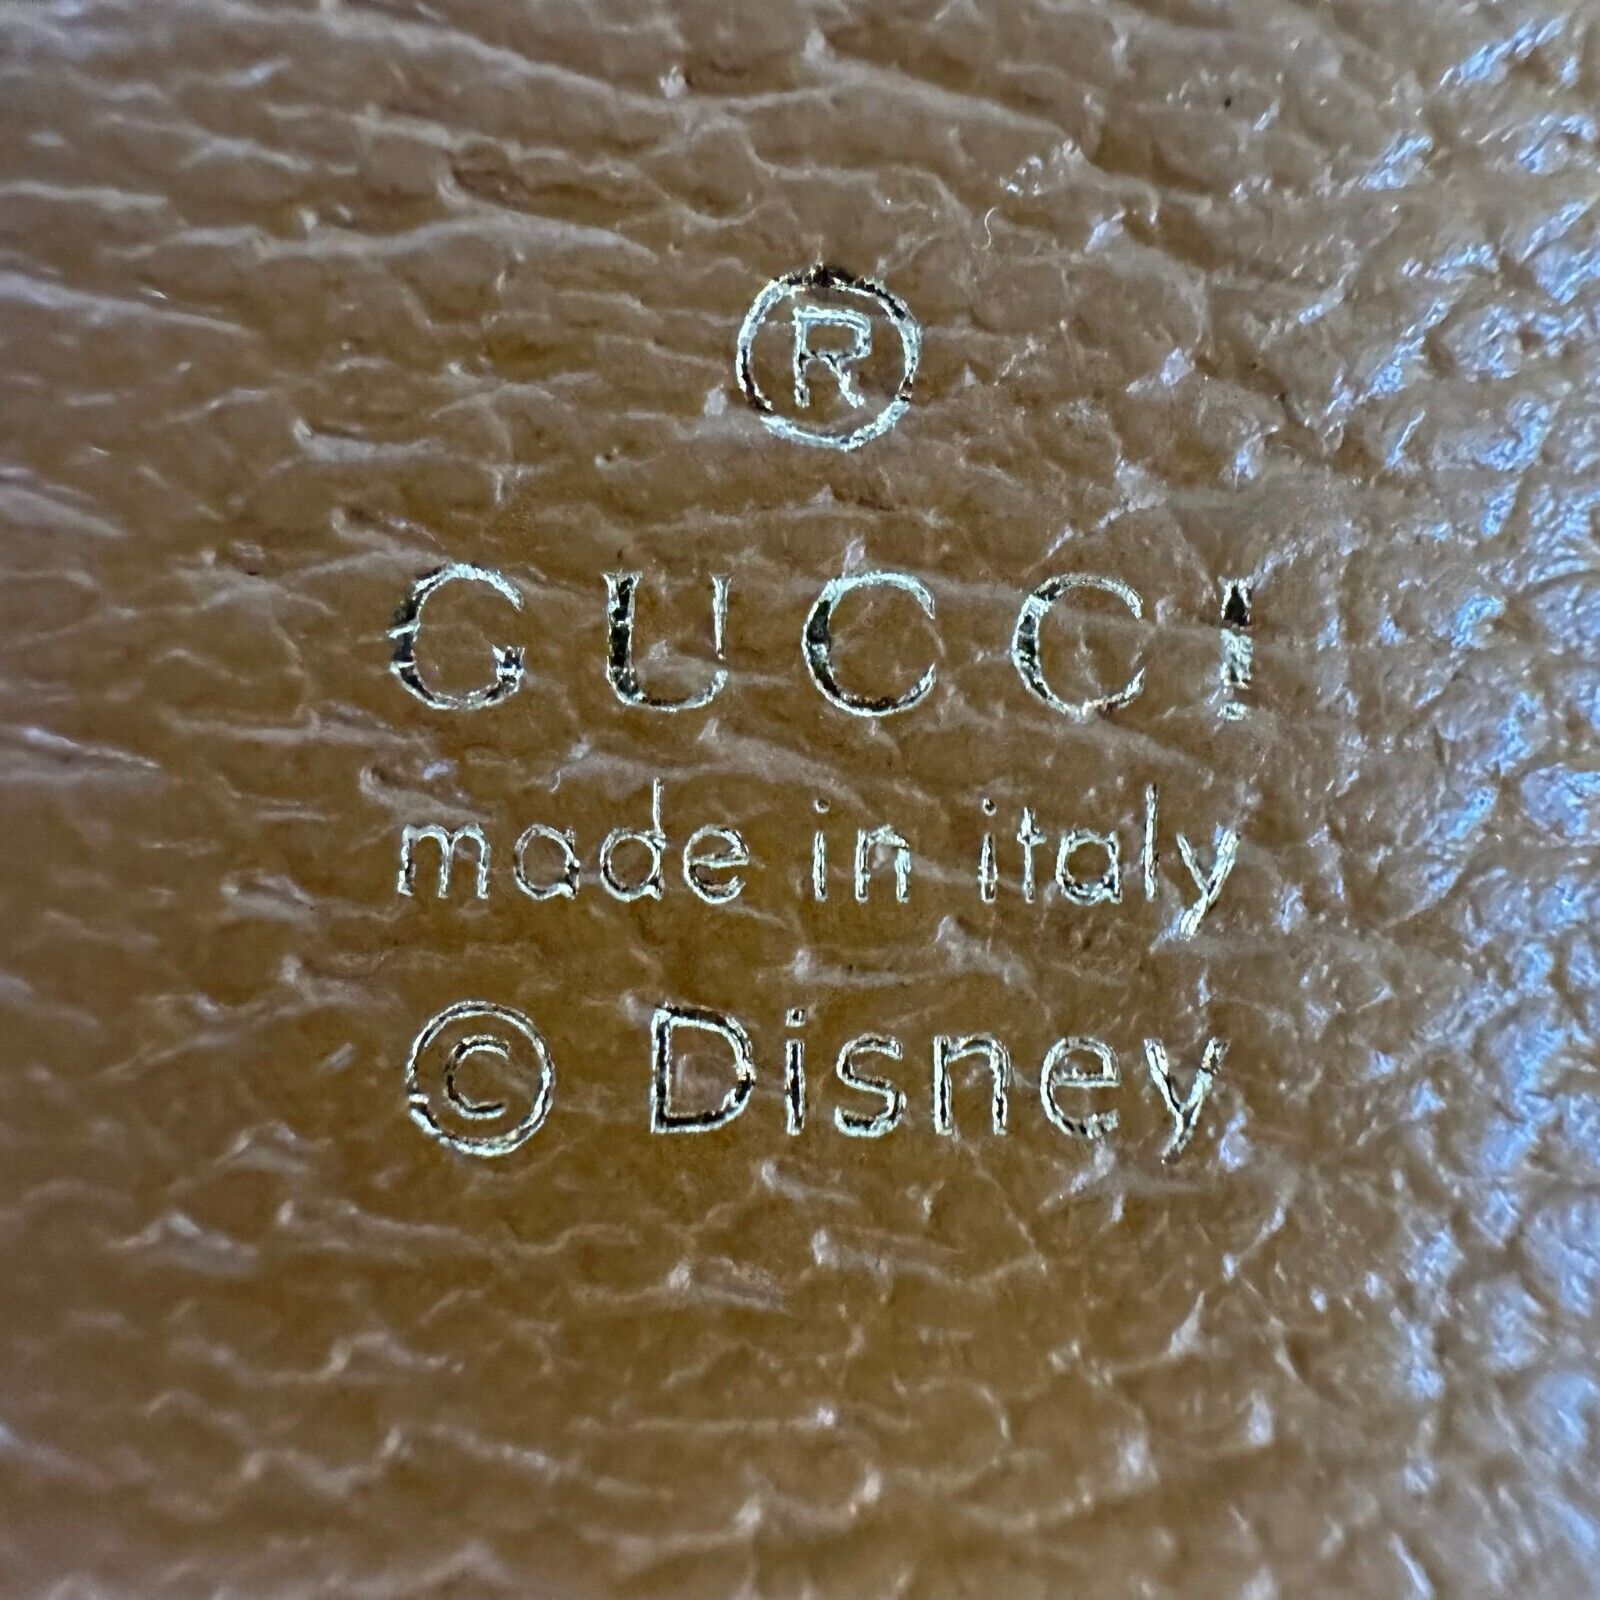 Gucci X Disney Collaboration Mickey GG Folio Fold Wallet